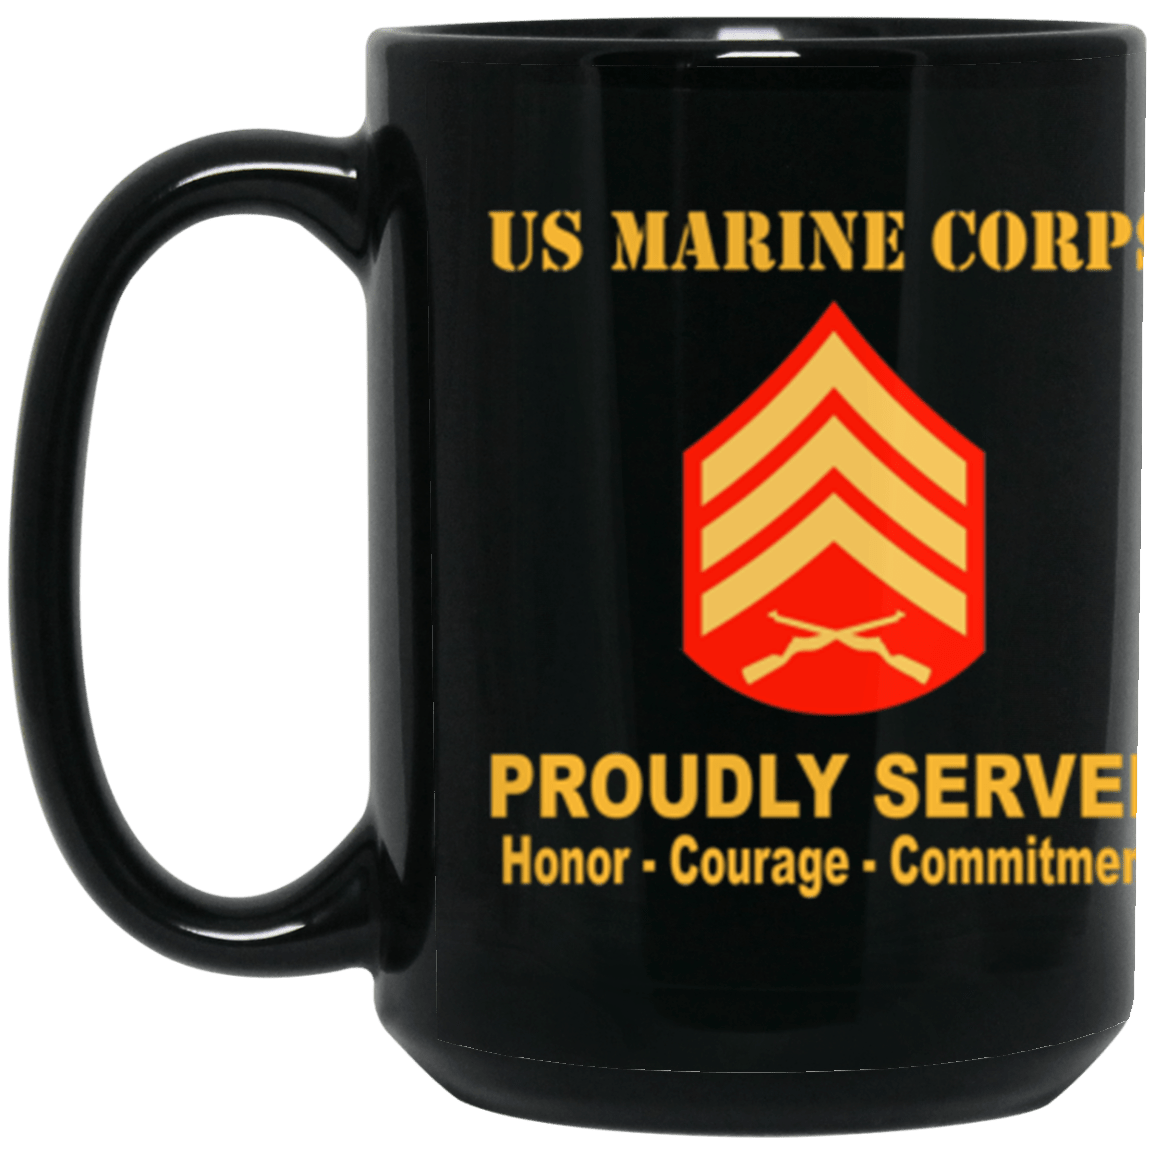 USMC E-5 Sergeant E5 Sgt Noncommissioned Officer Ranks Proudly Served Core Values 15 oz. Black Mug